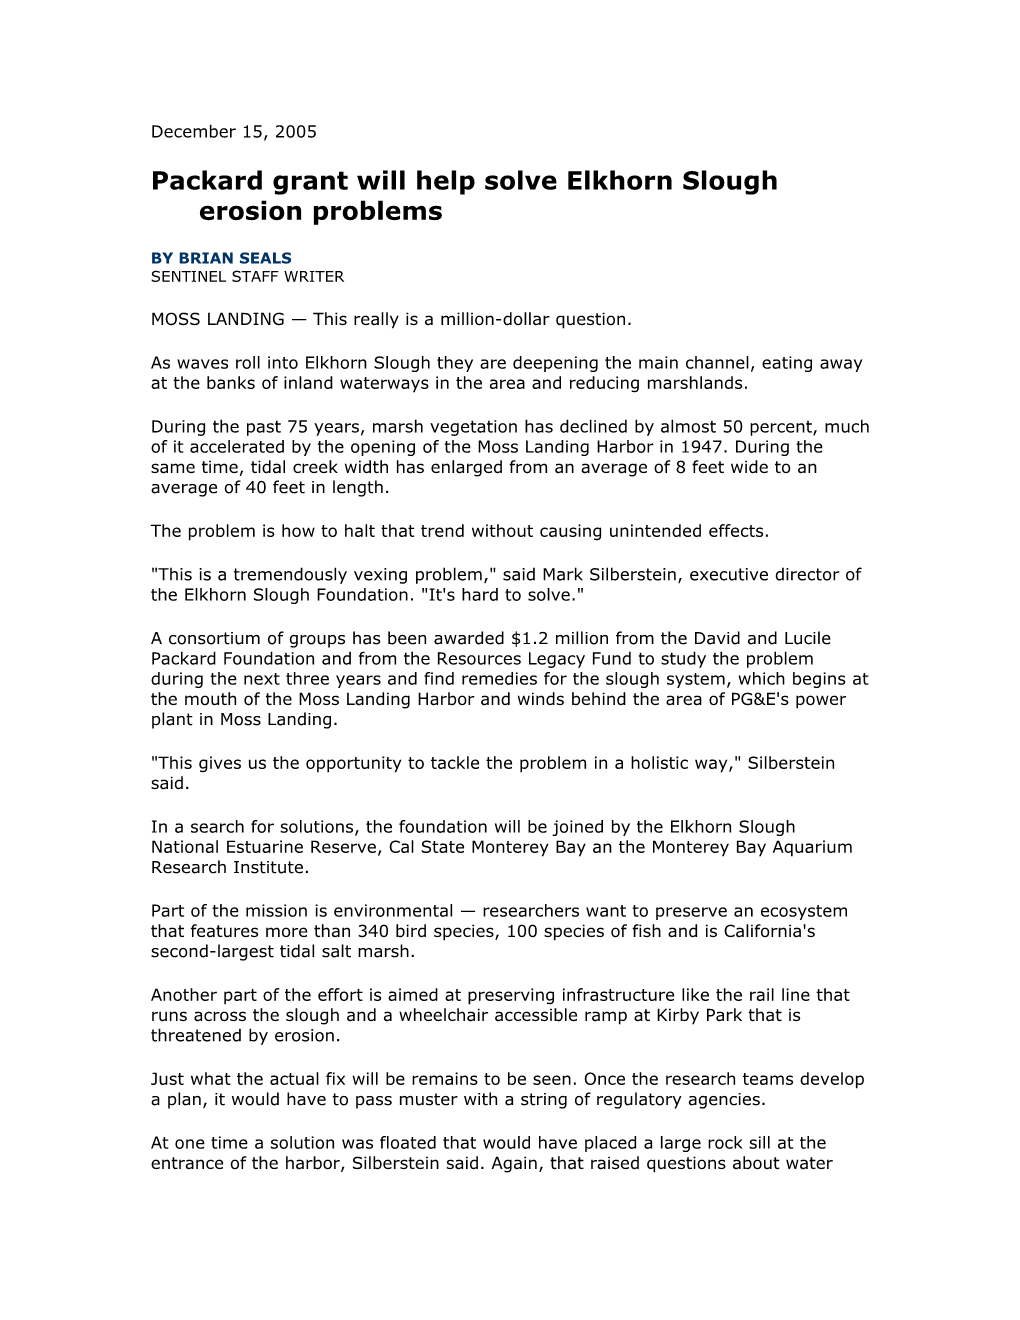 Packard Grant Will Help Solve Elkhorn Slough Erosion Problems